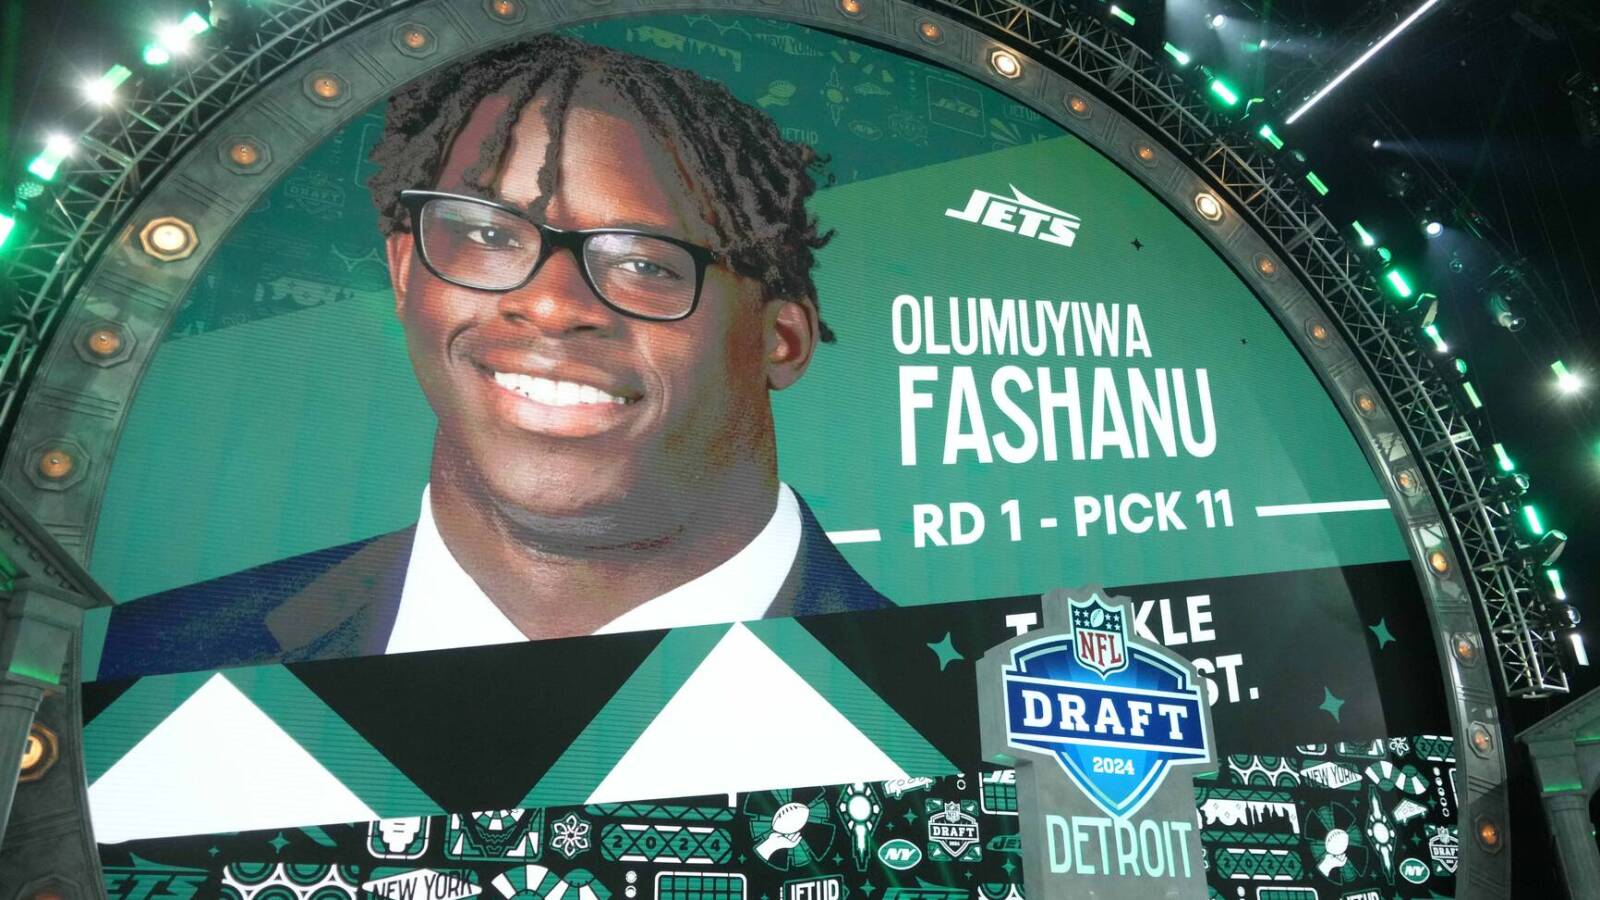 Executives seem split on Jets drafting Olu Fashanu over playmaker